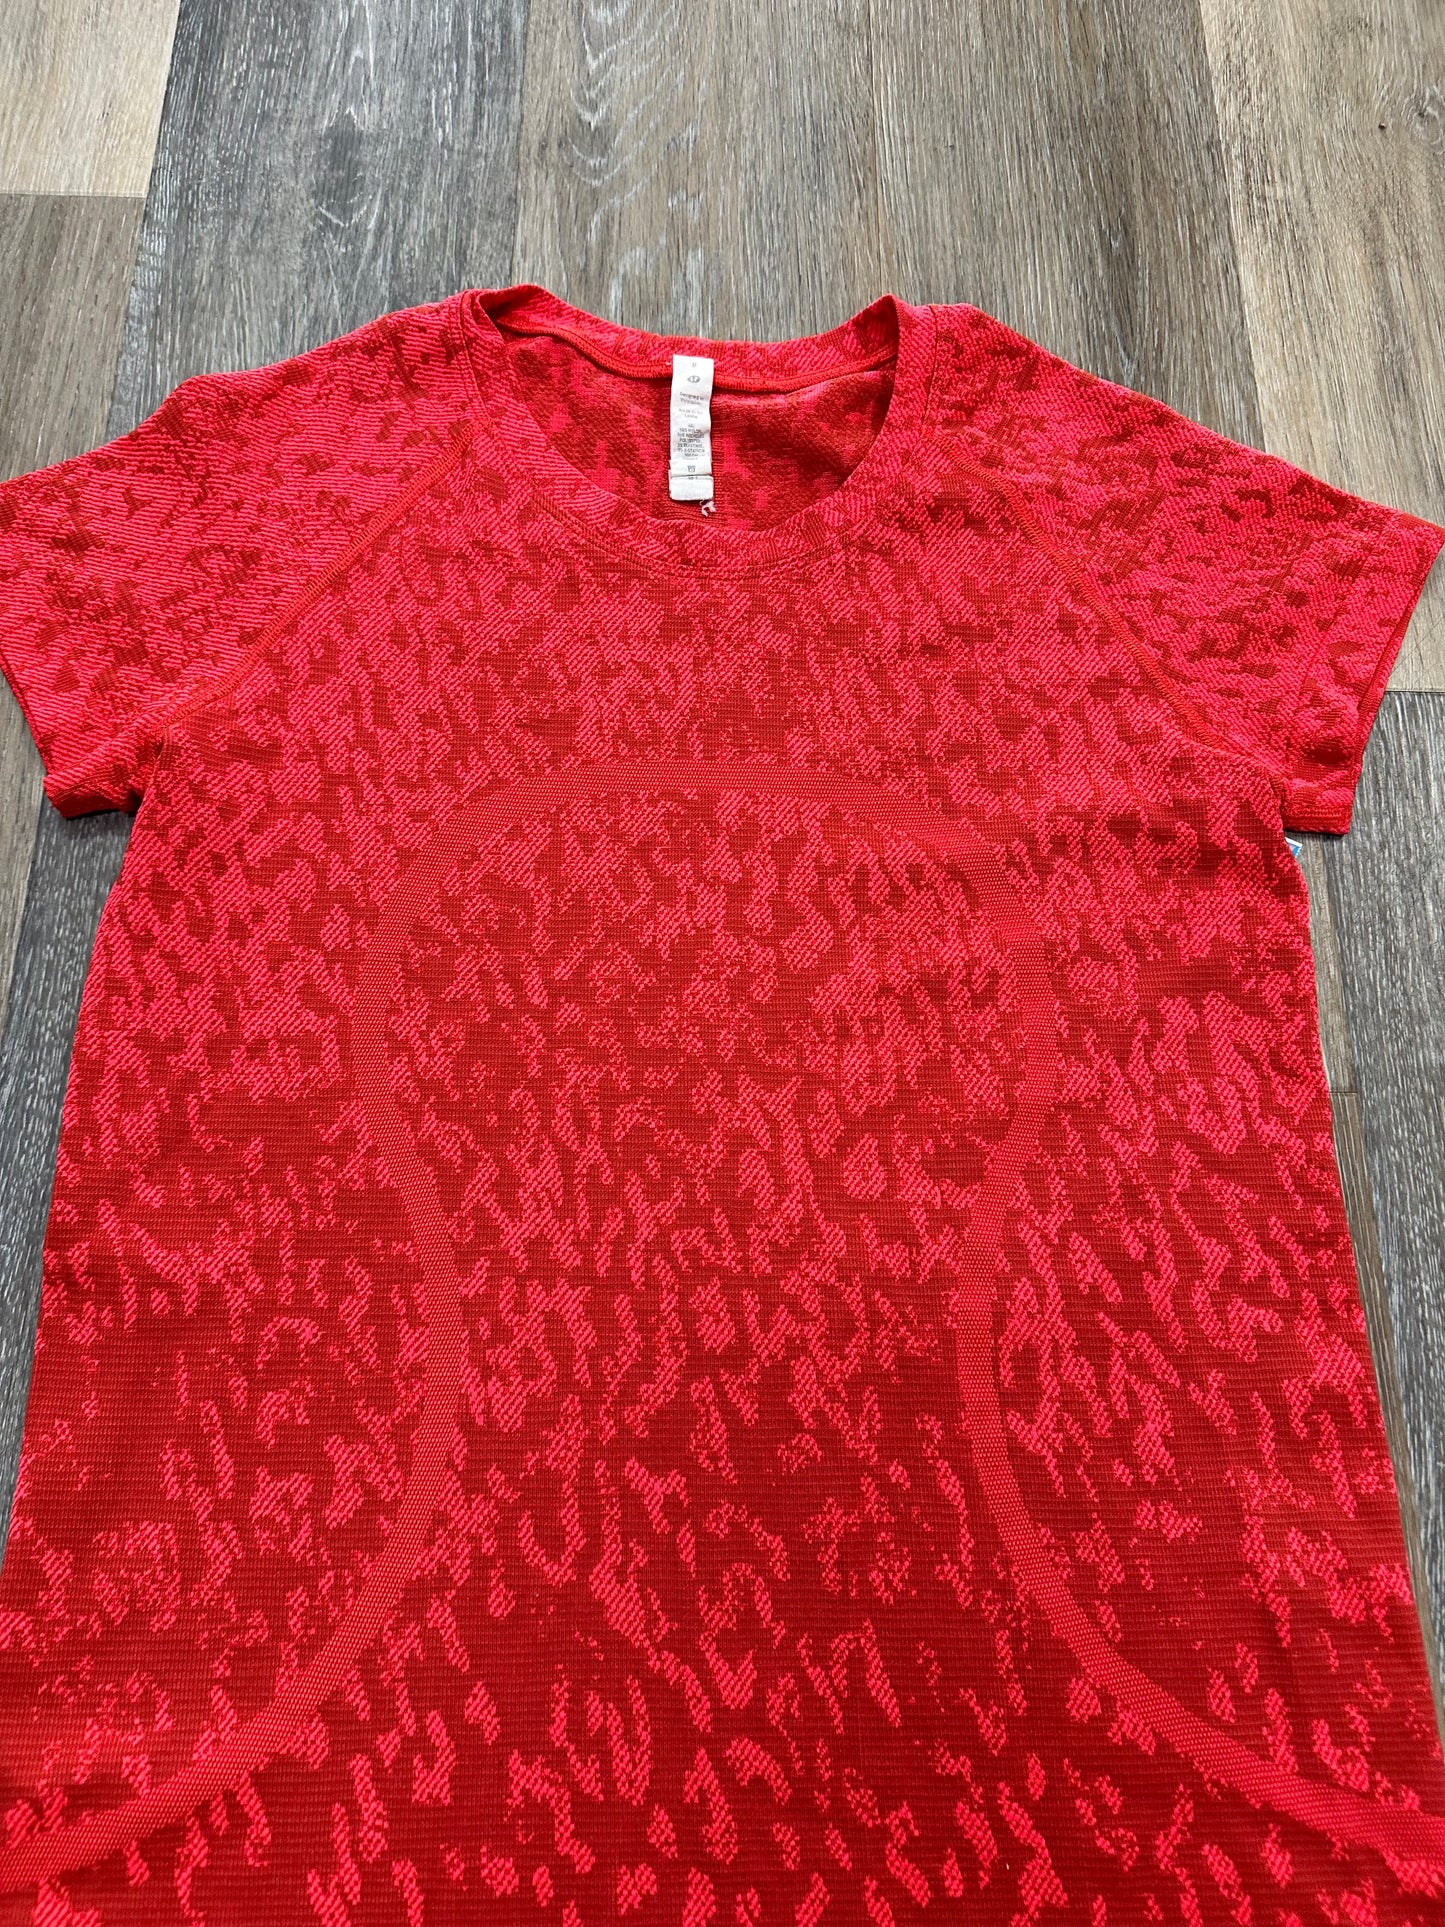 Red Athletic Top Short Sleeve Lululemon, Size 8